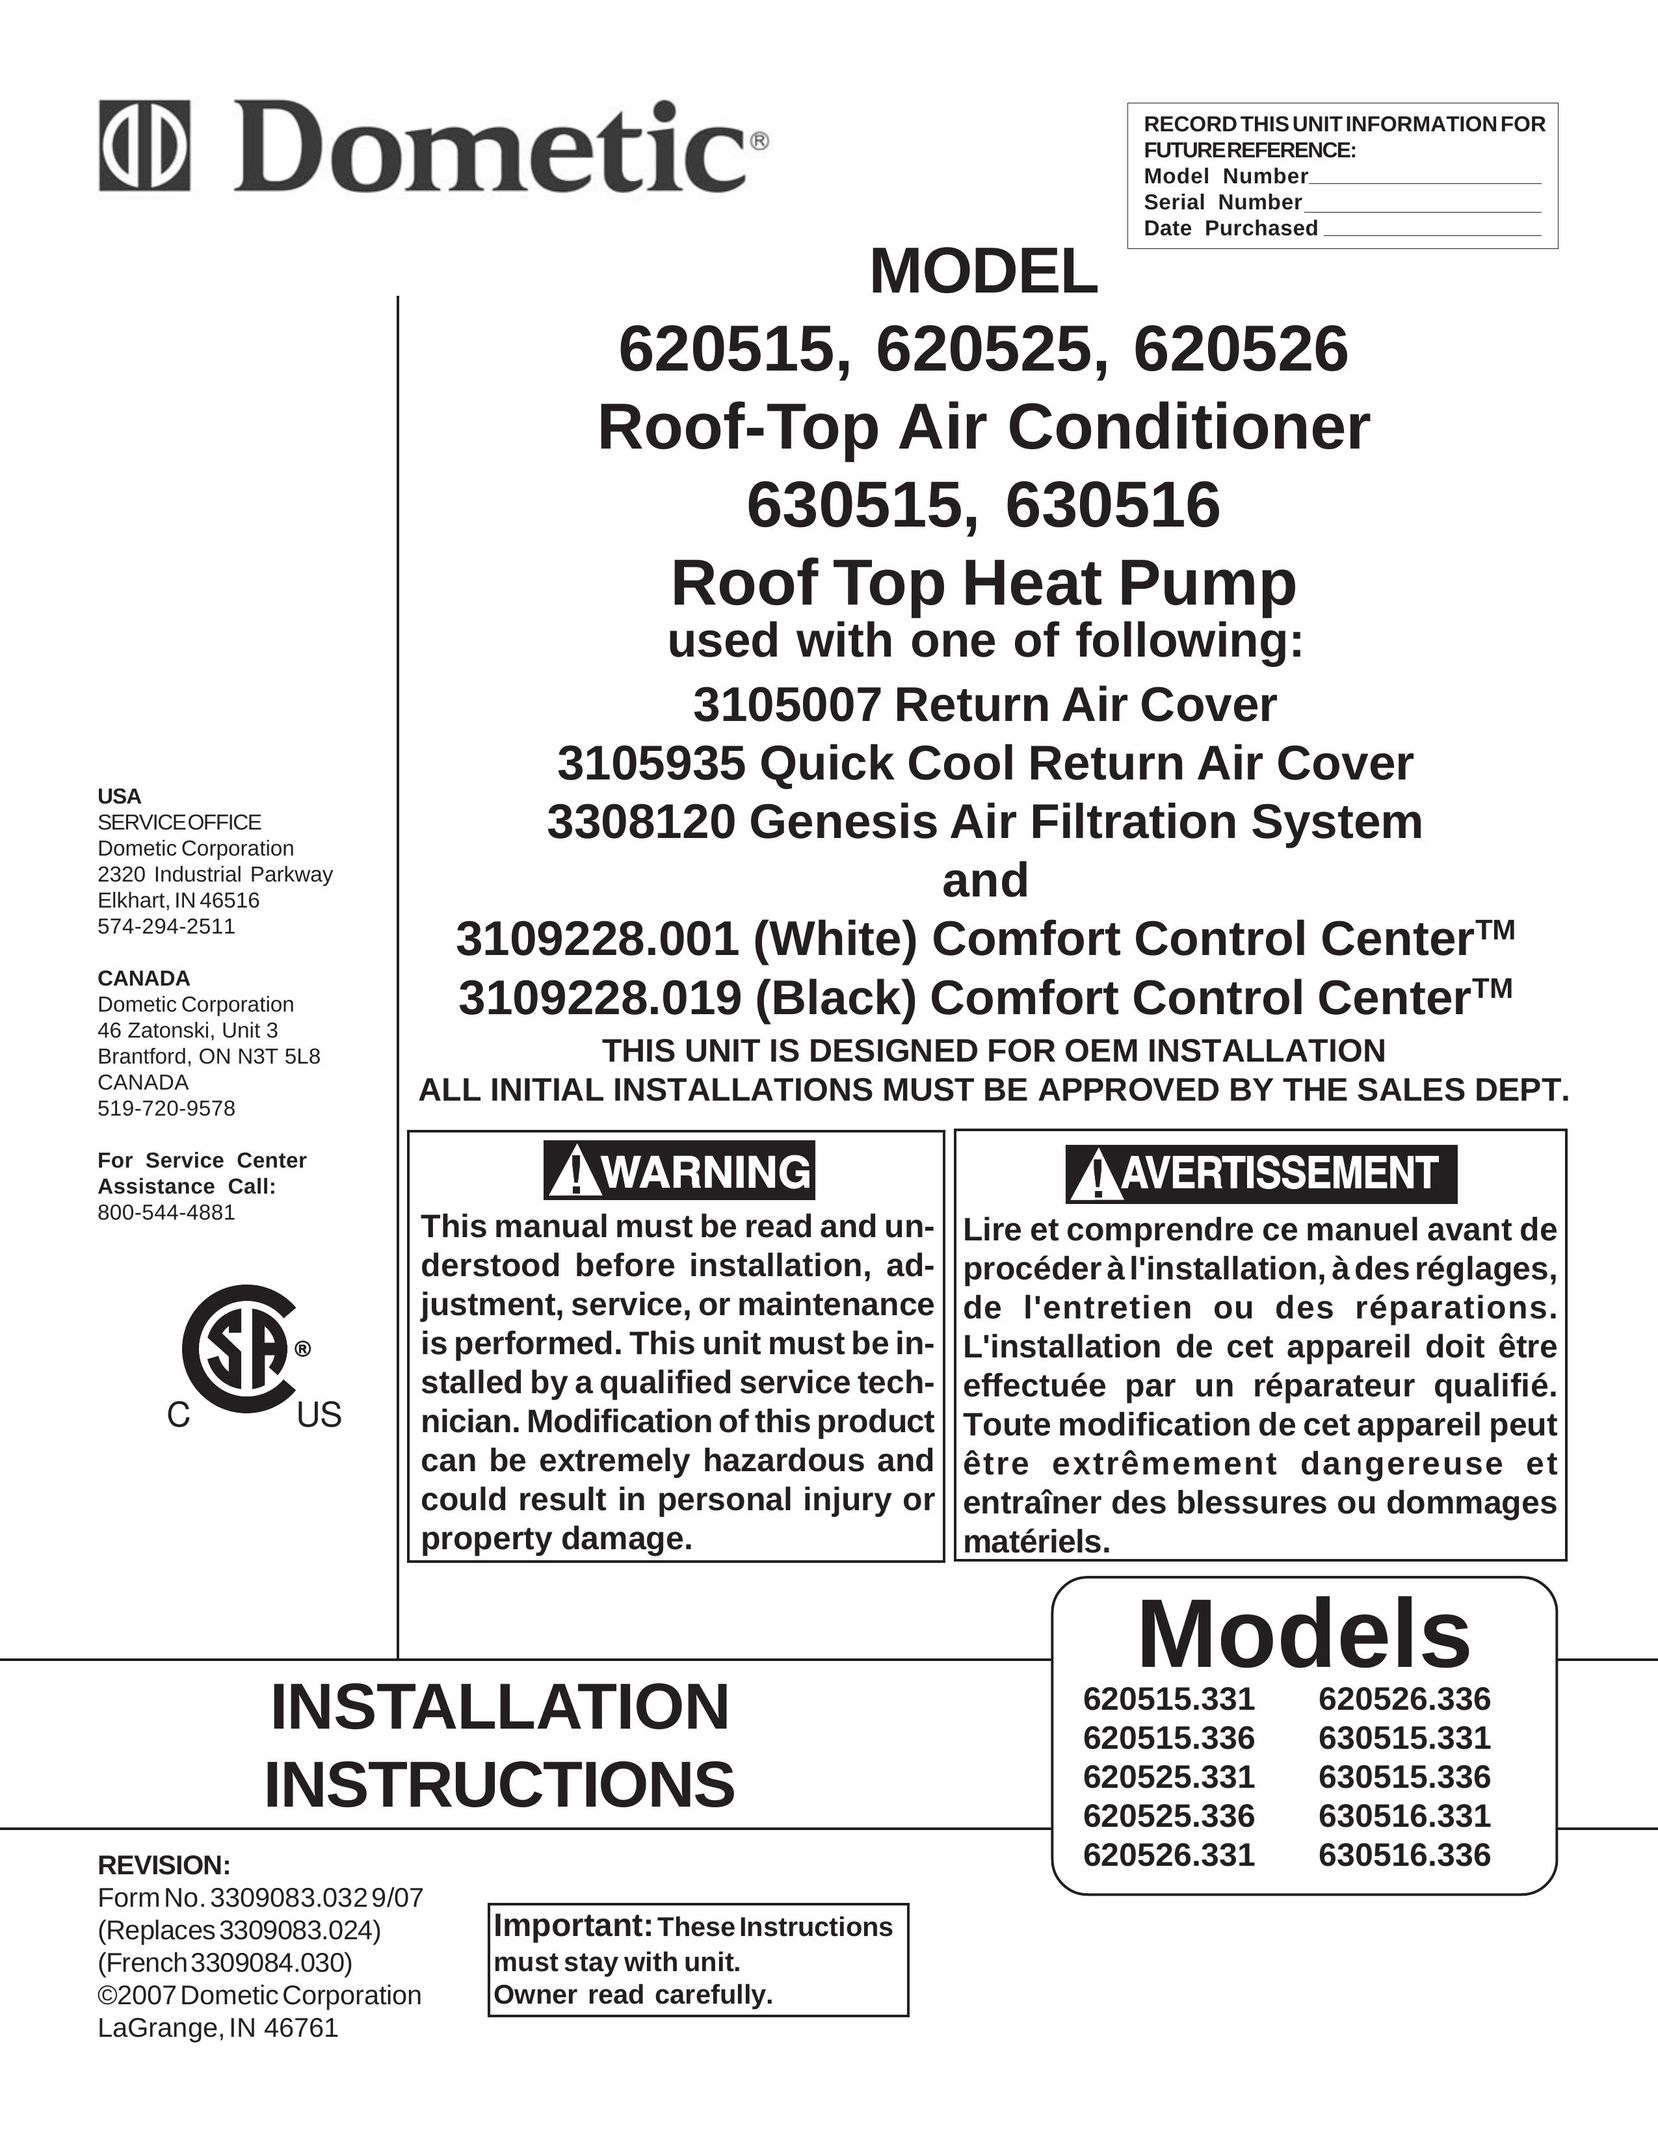 Dometic 630515.331 Air Conditioner User Manual